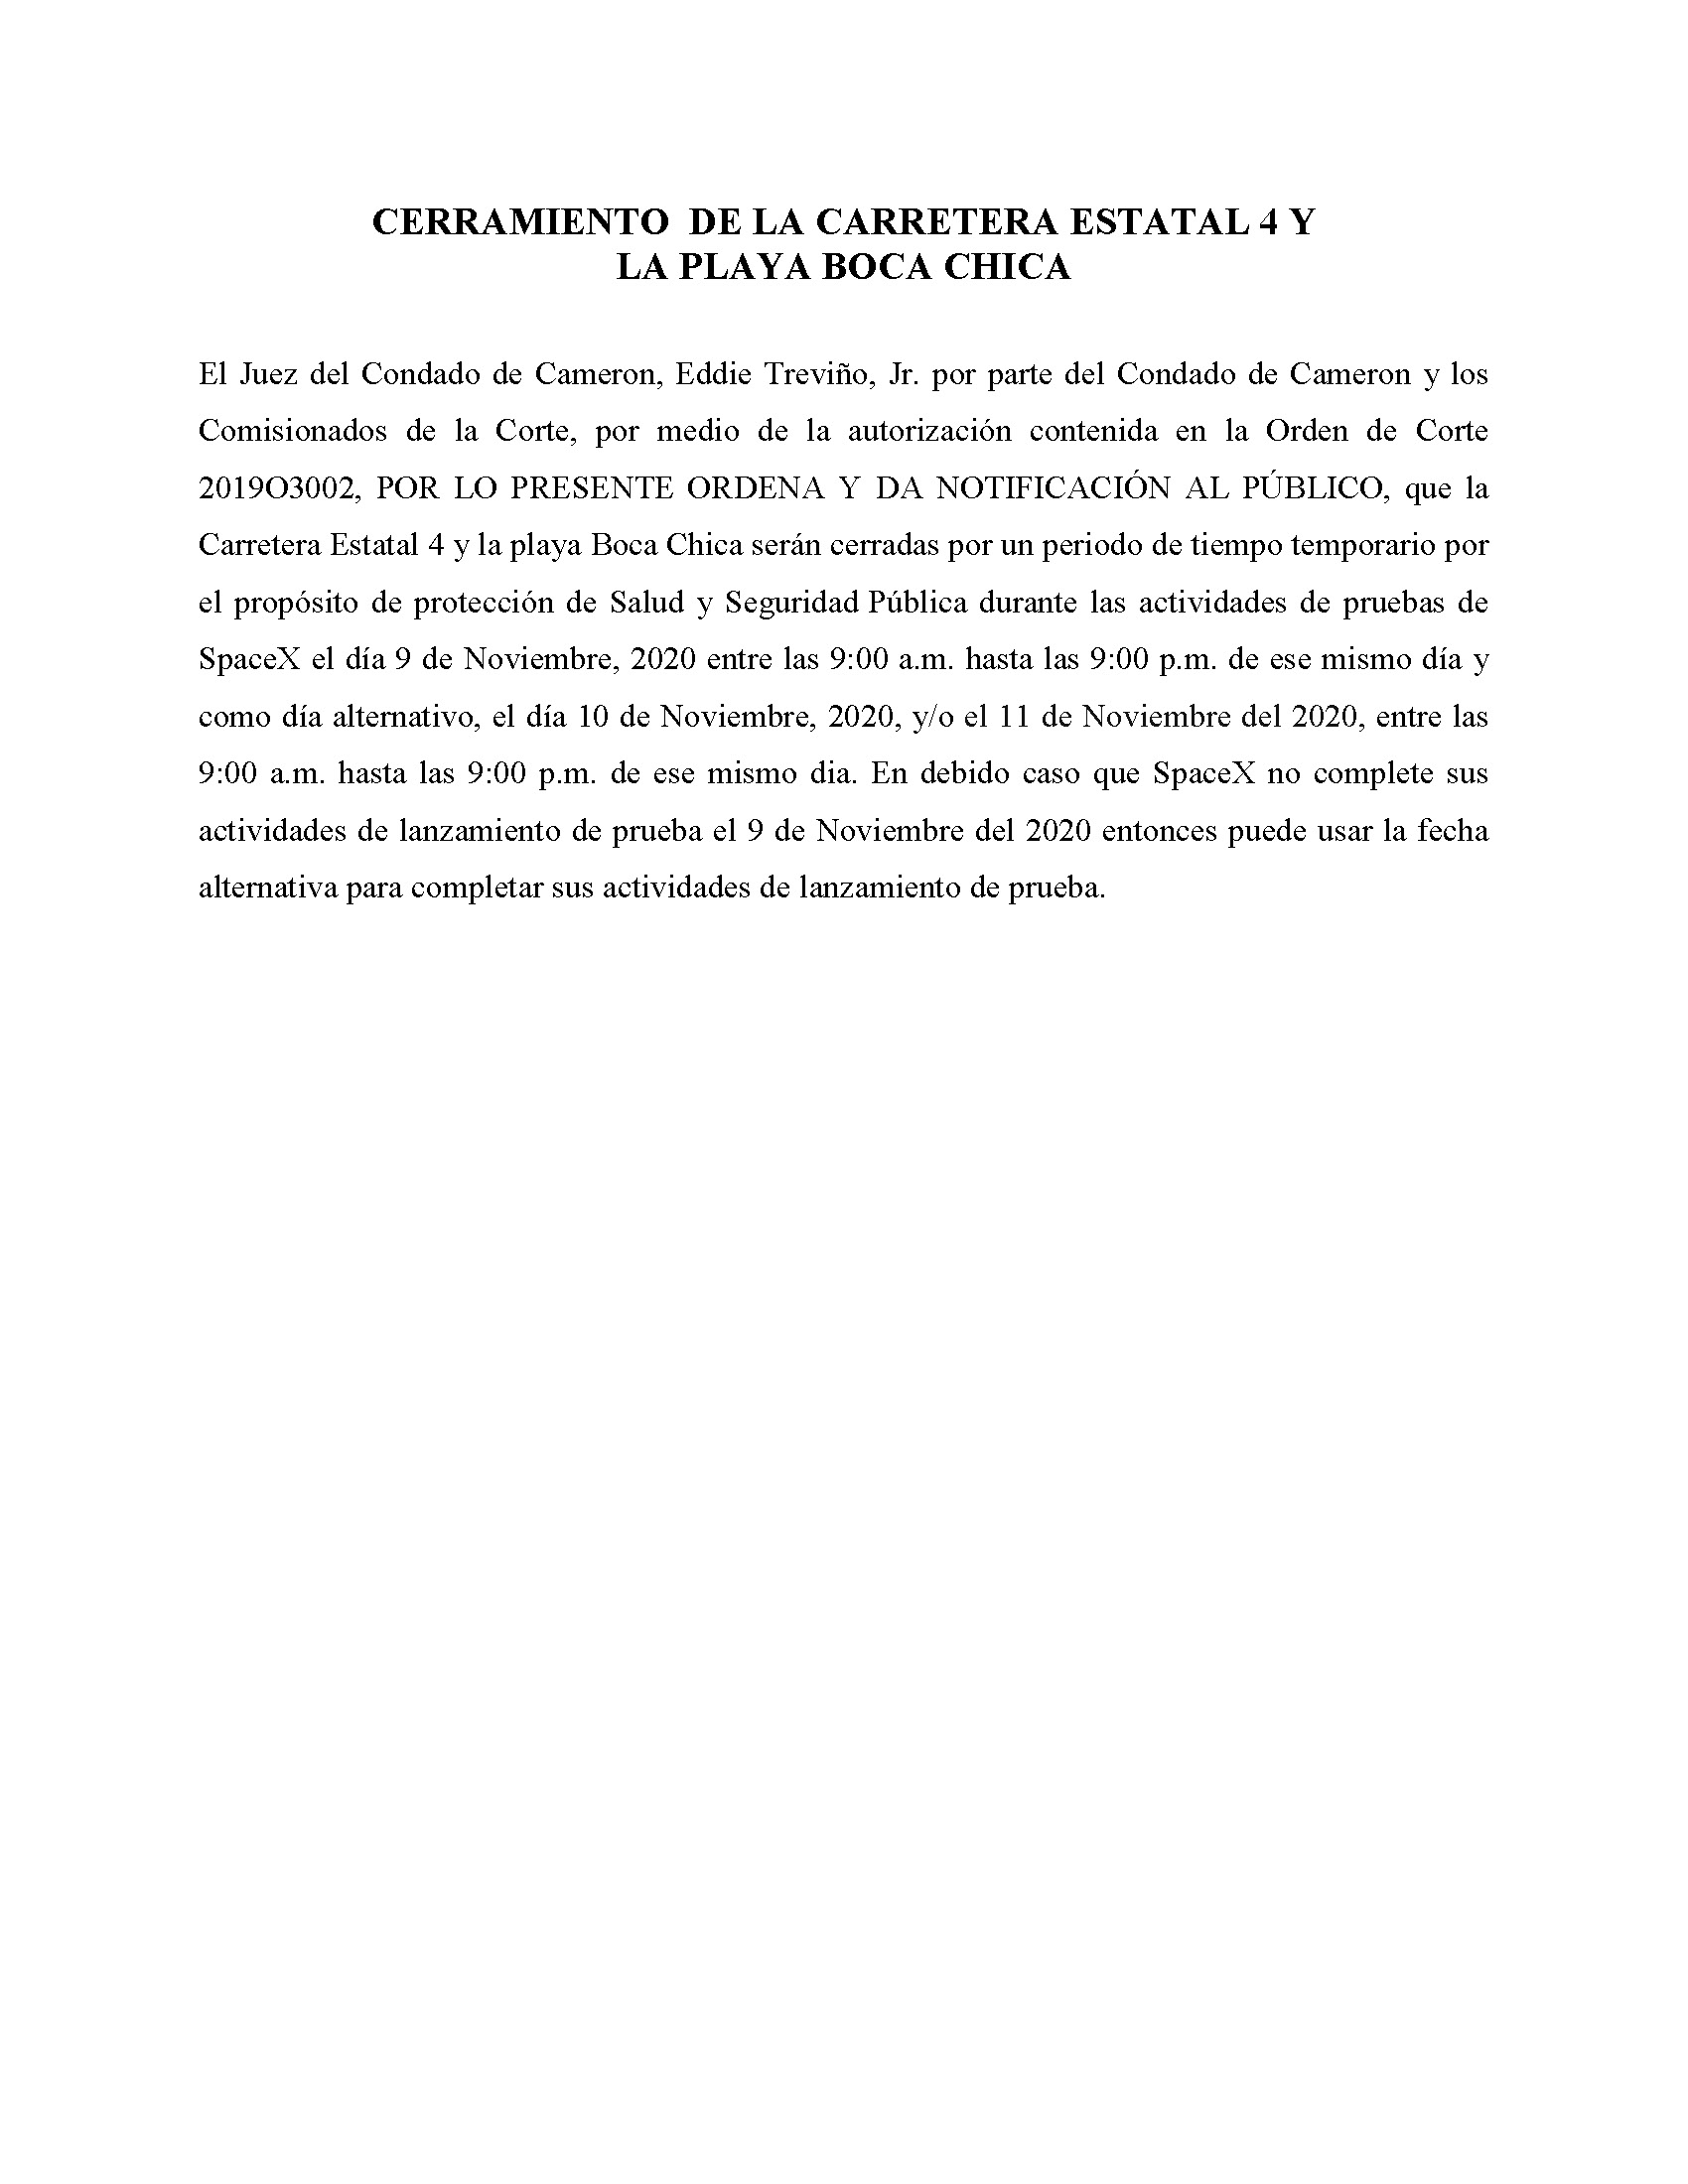 ORDER.CLOSURE OF HIGHWAY 4 Y LA PLAYA BOCA CHICA.SPANISH.11.09.20